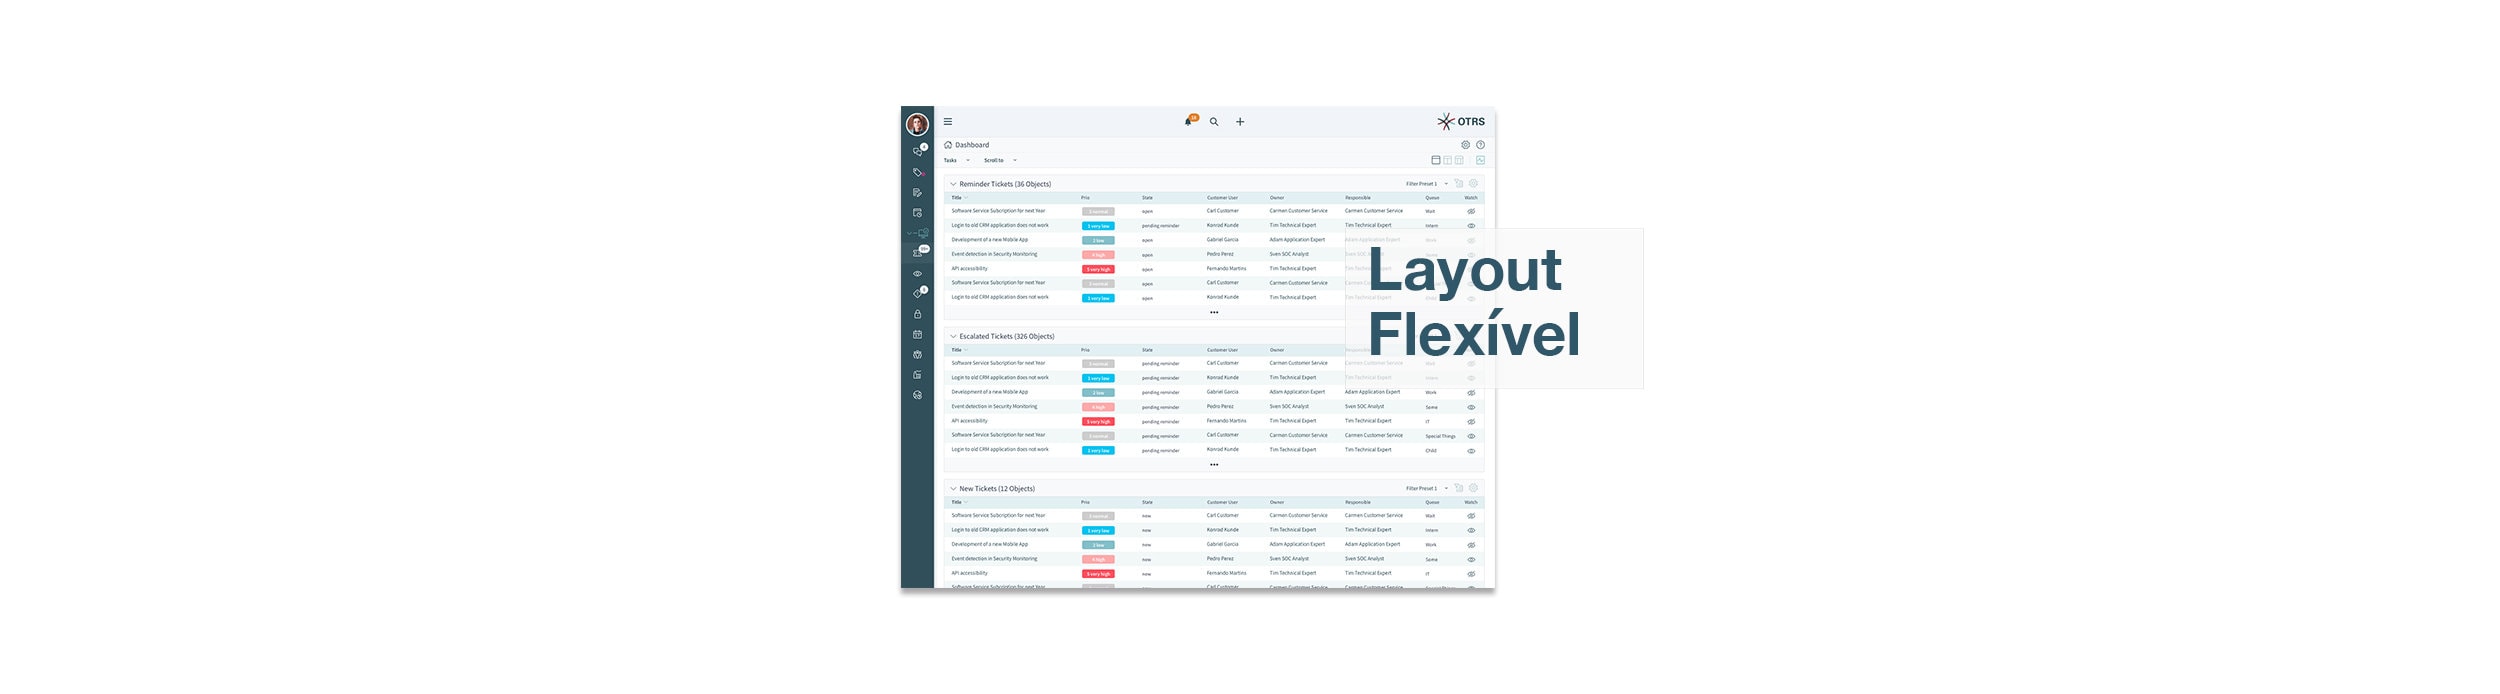 OTRS 8-Screenshot-flexible layout